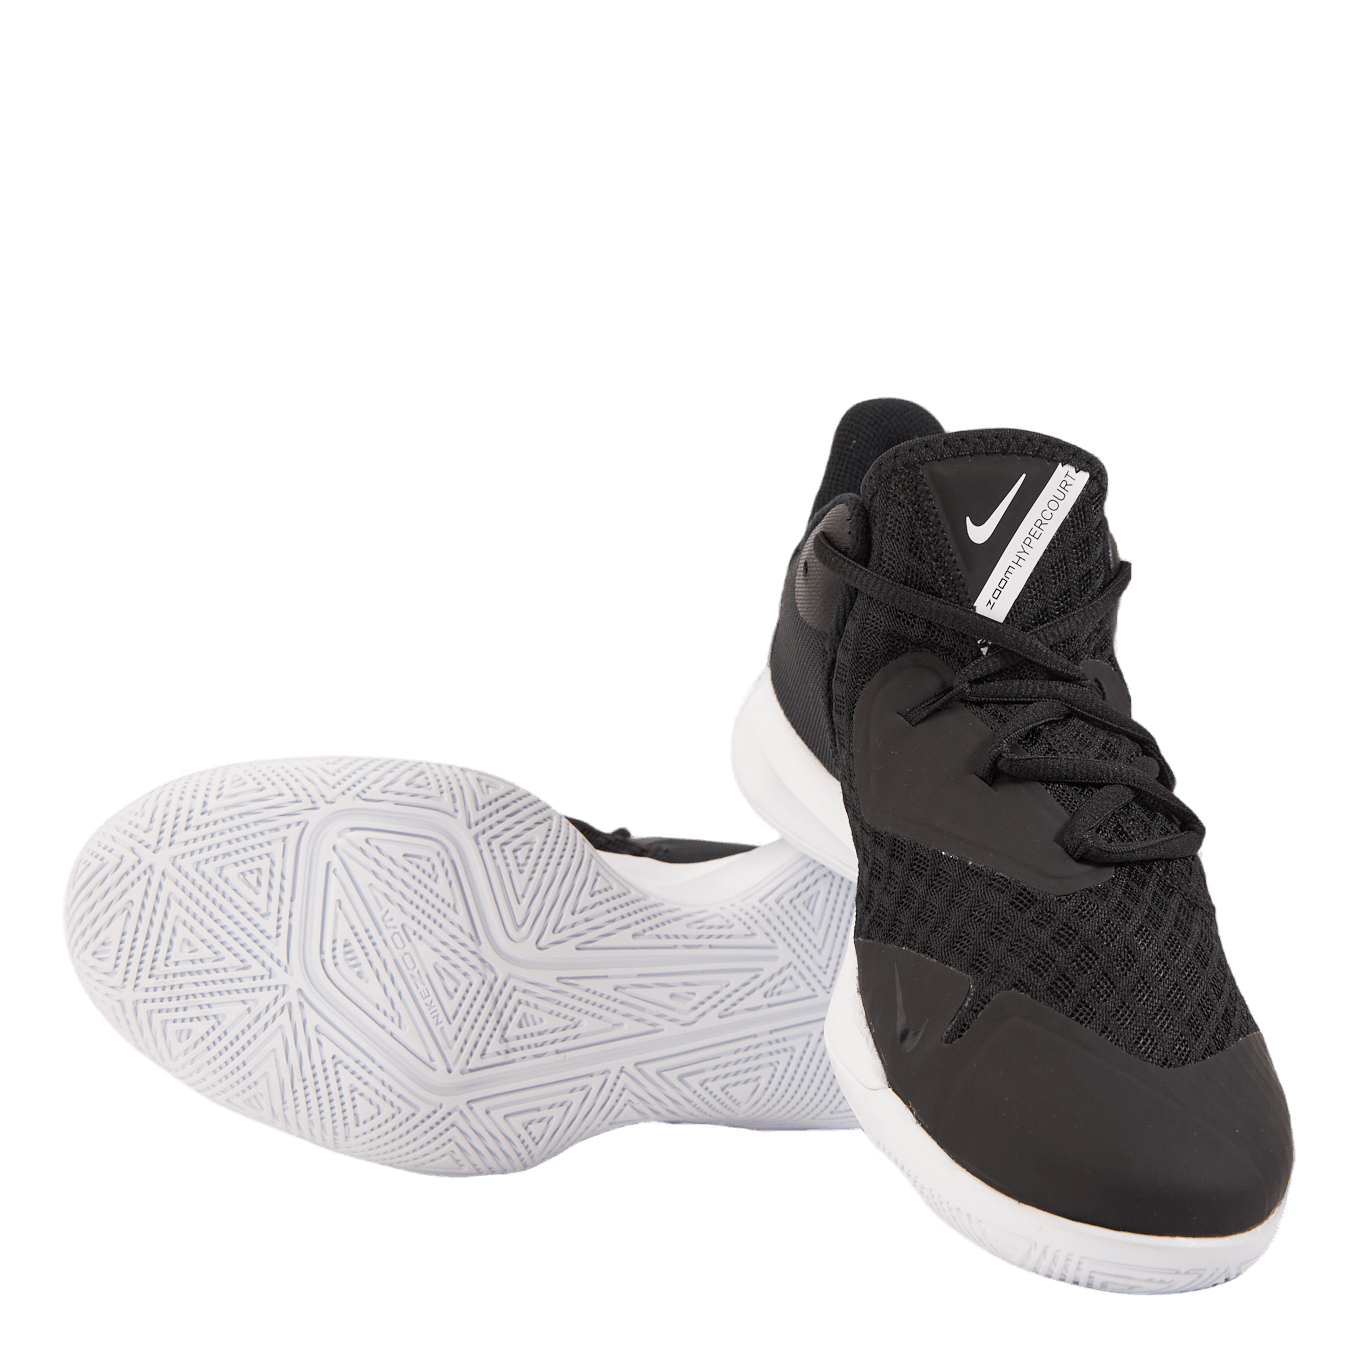 Nike Zoom Hyperspeed Court Uni Black/white